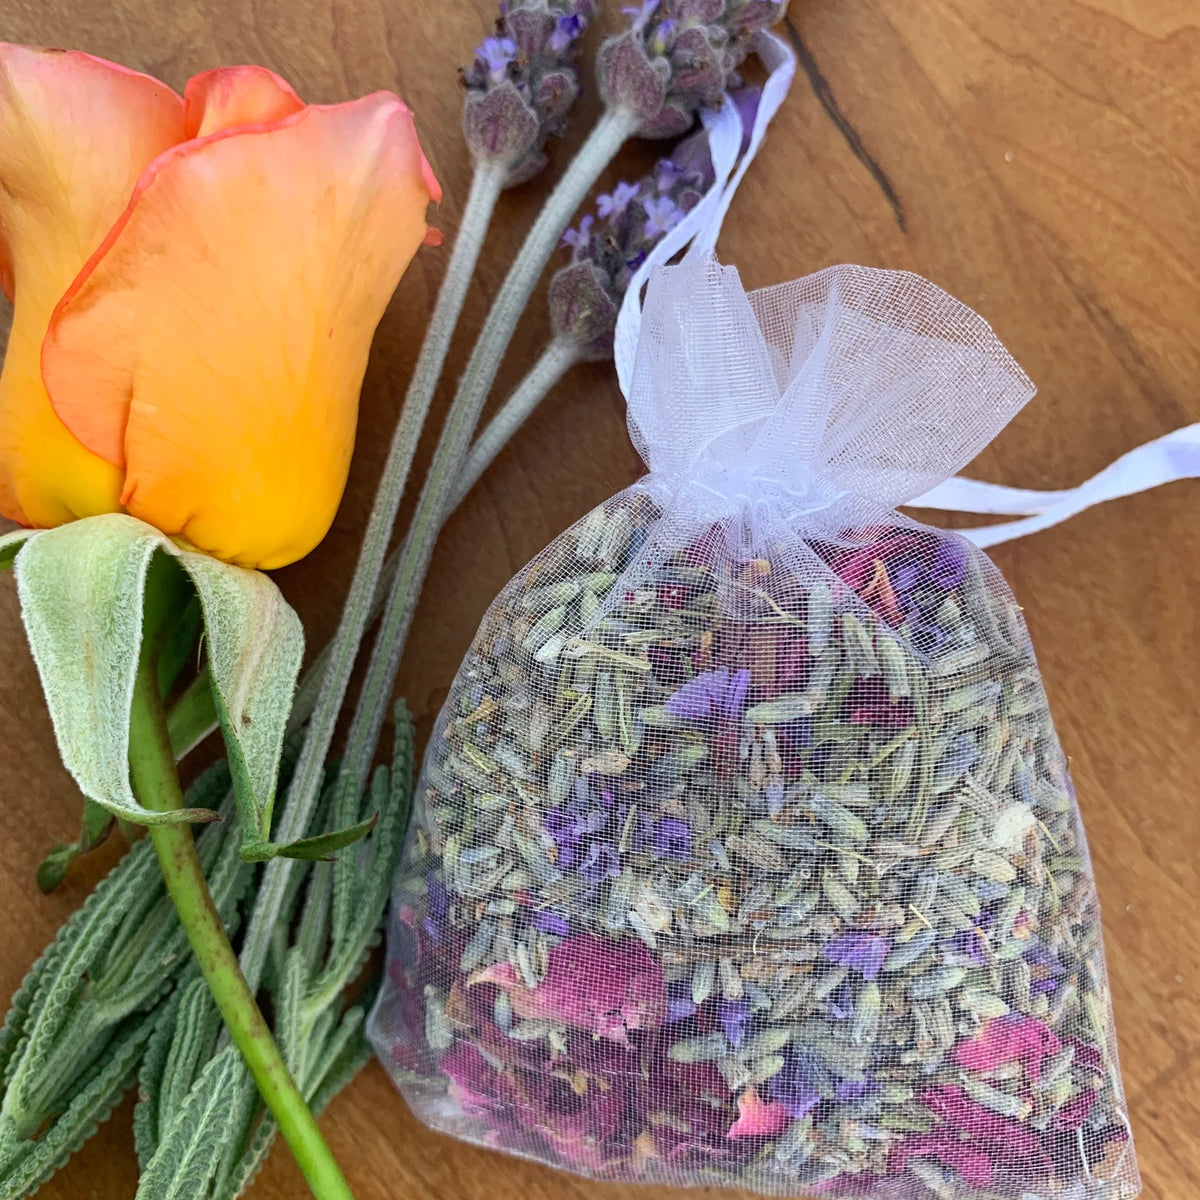 Flor artificial y seca Natural Lavender Bud Dry Flower Sachet Bag Car Room  Aromatic Desecante Hogar Fragancia Bolsitas Polilla y Moho - (Color